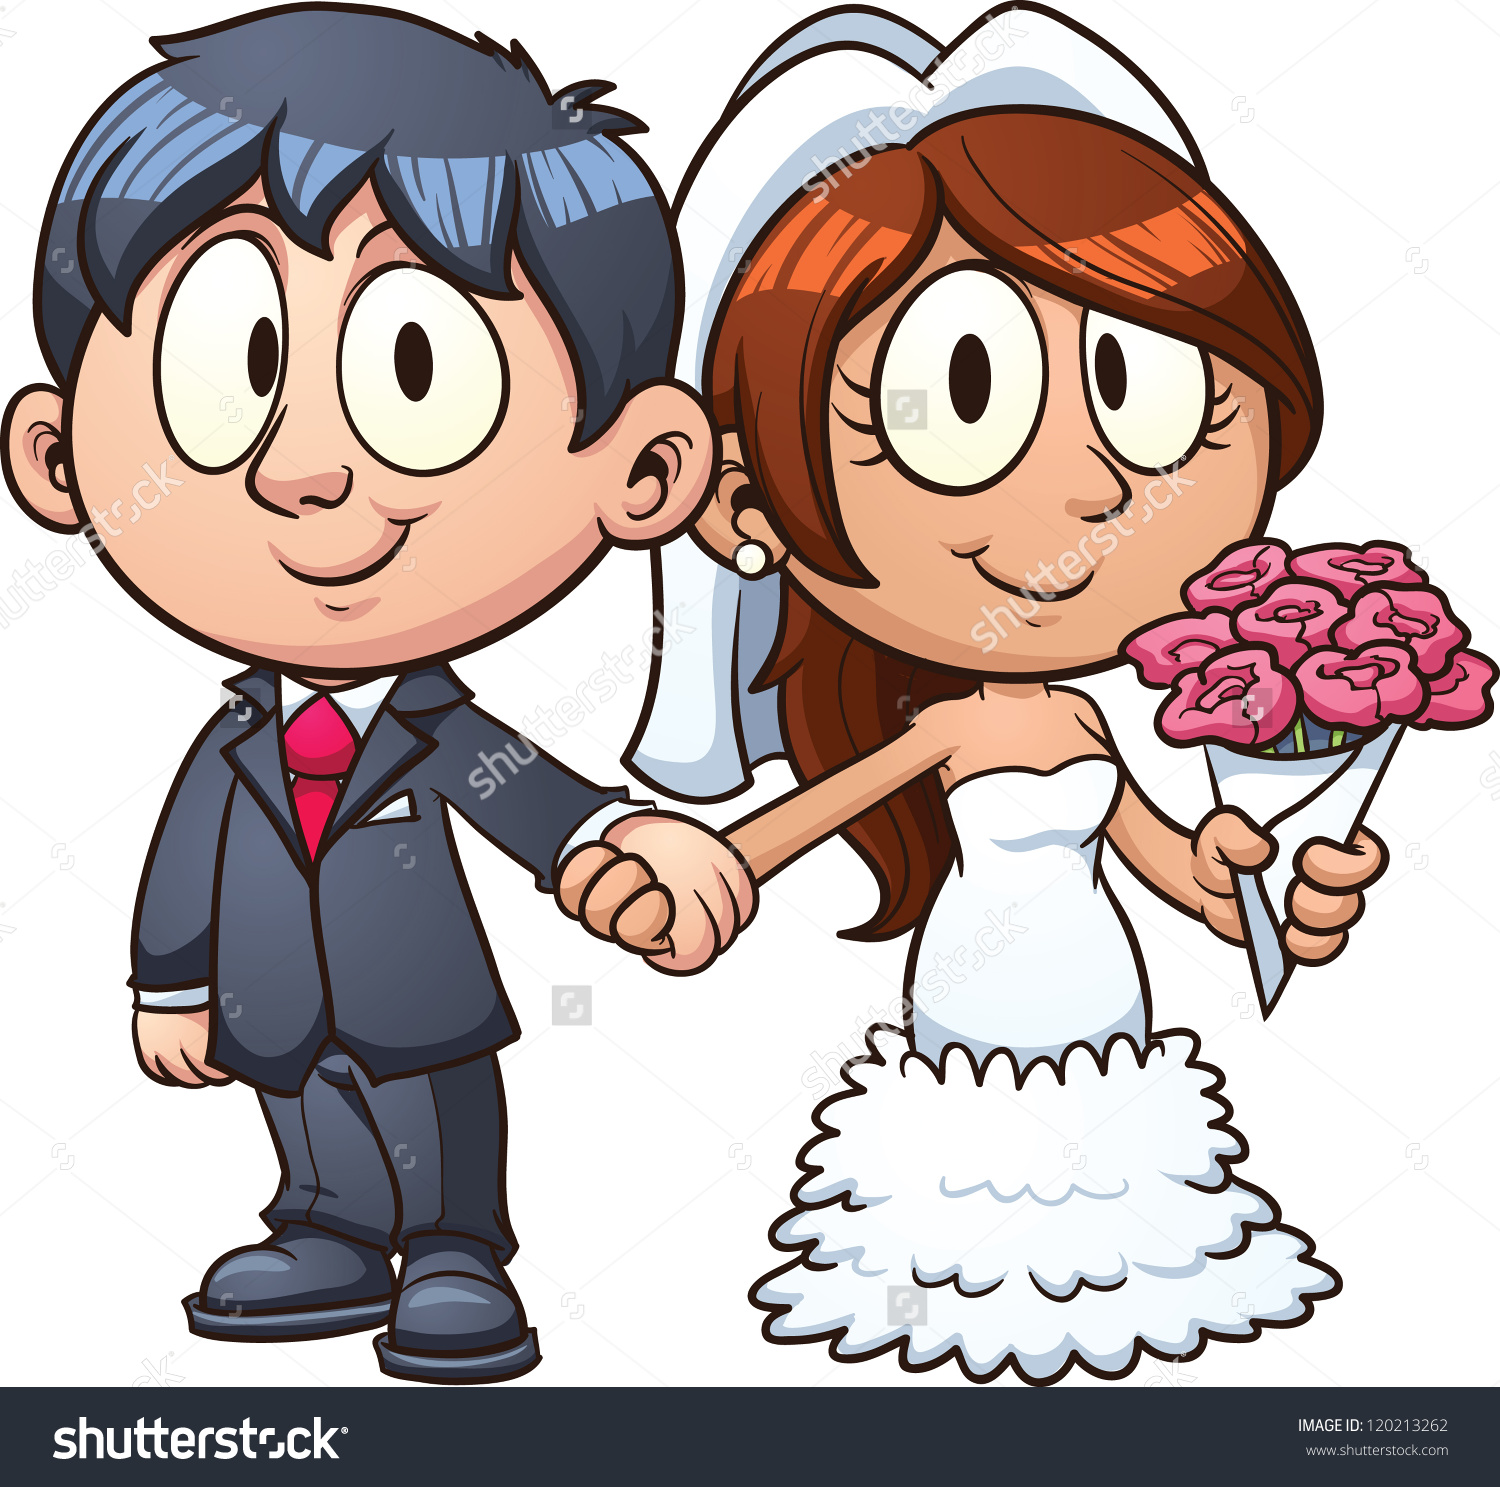 Bride and groom bride images 